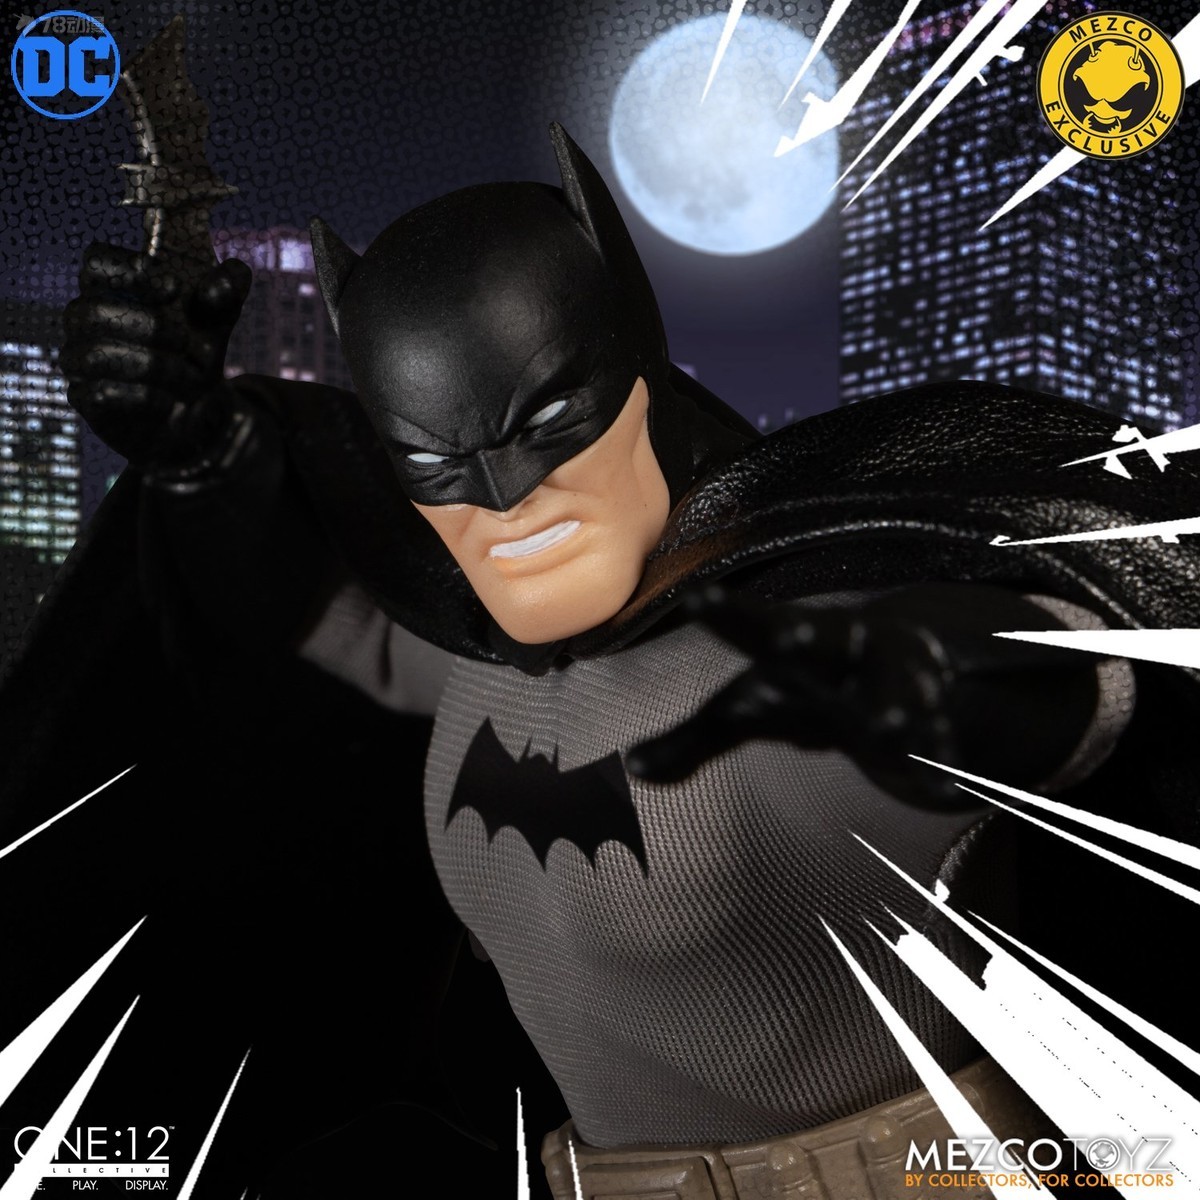 Mezco 新品 1/12集體系列 DC黃金時代 蝙蝠俠 披篷騎士版 可動人偶